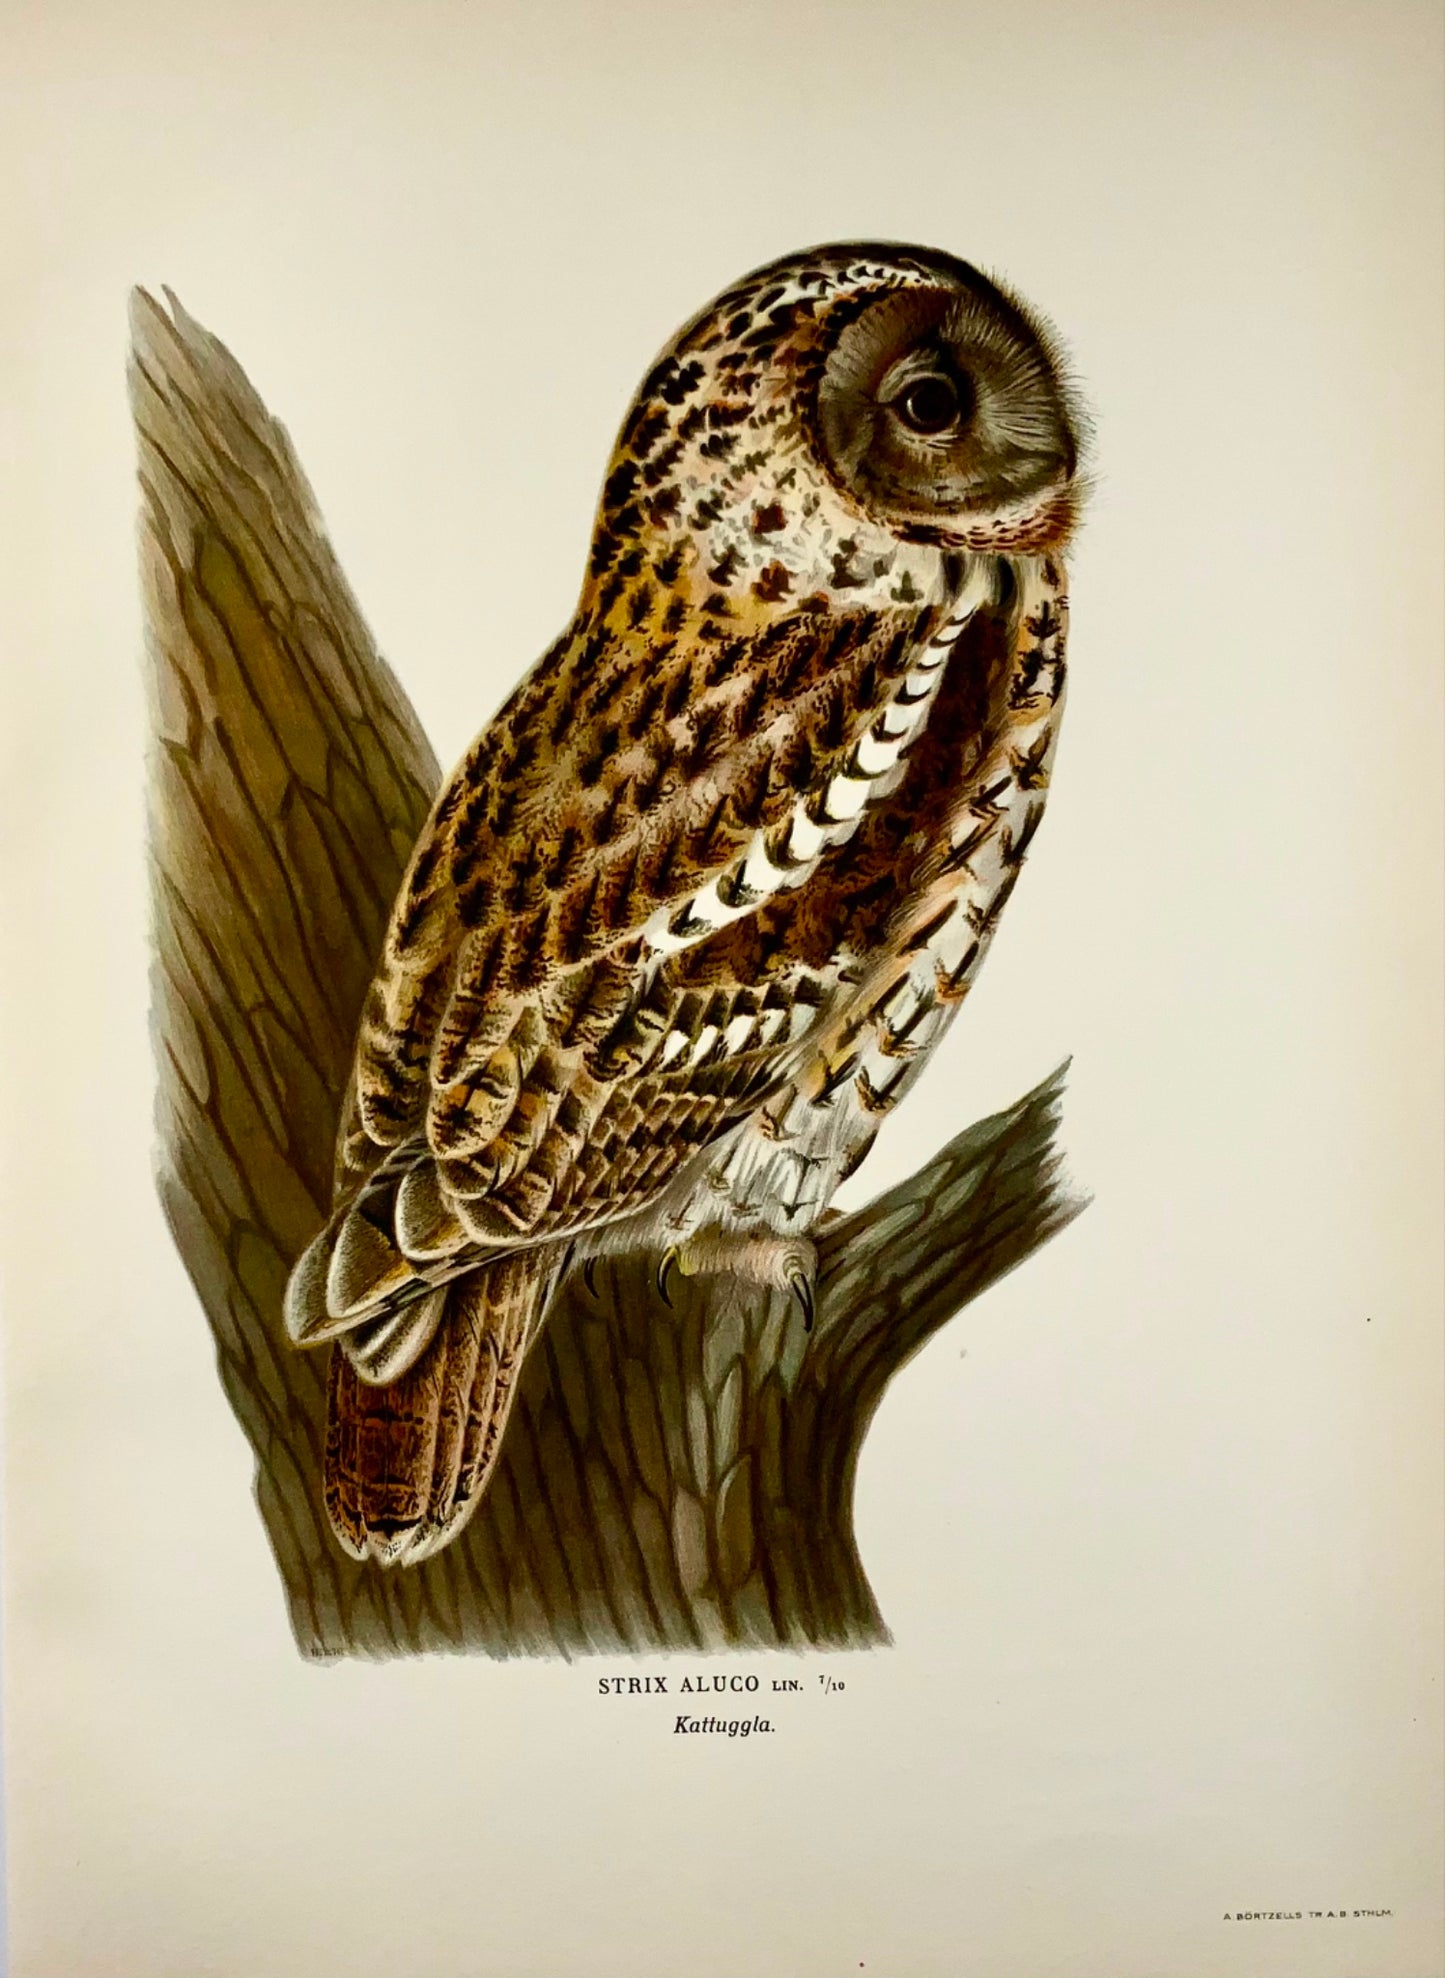 1918 Von Wright, Tawny Owl, grande lithographie in-folio, ornithologie